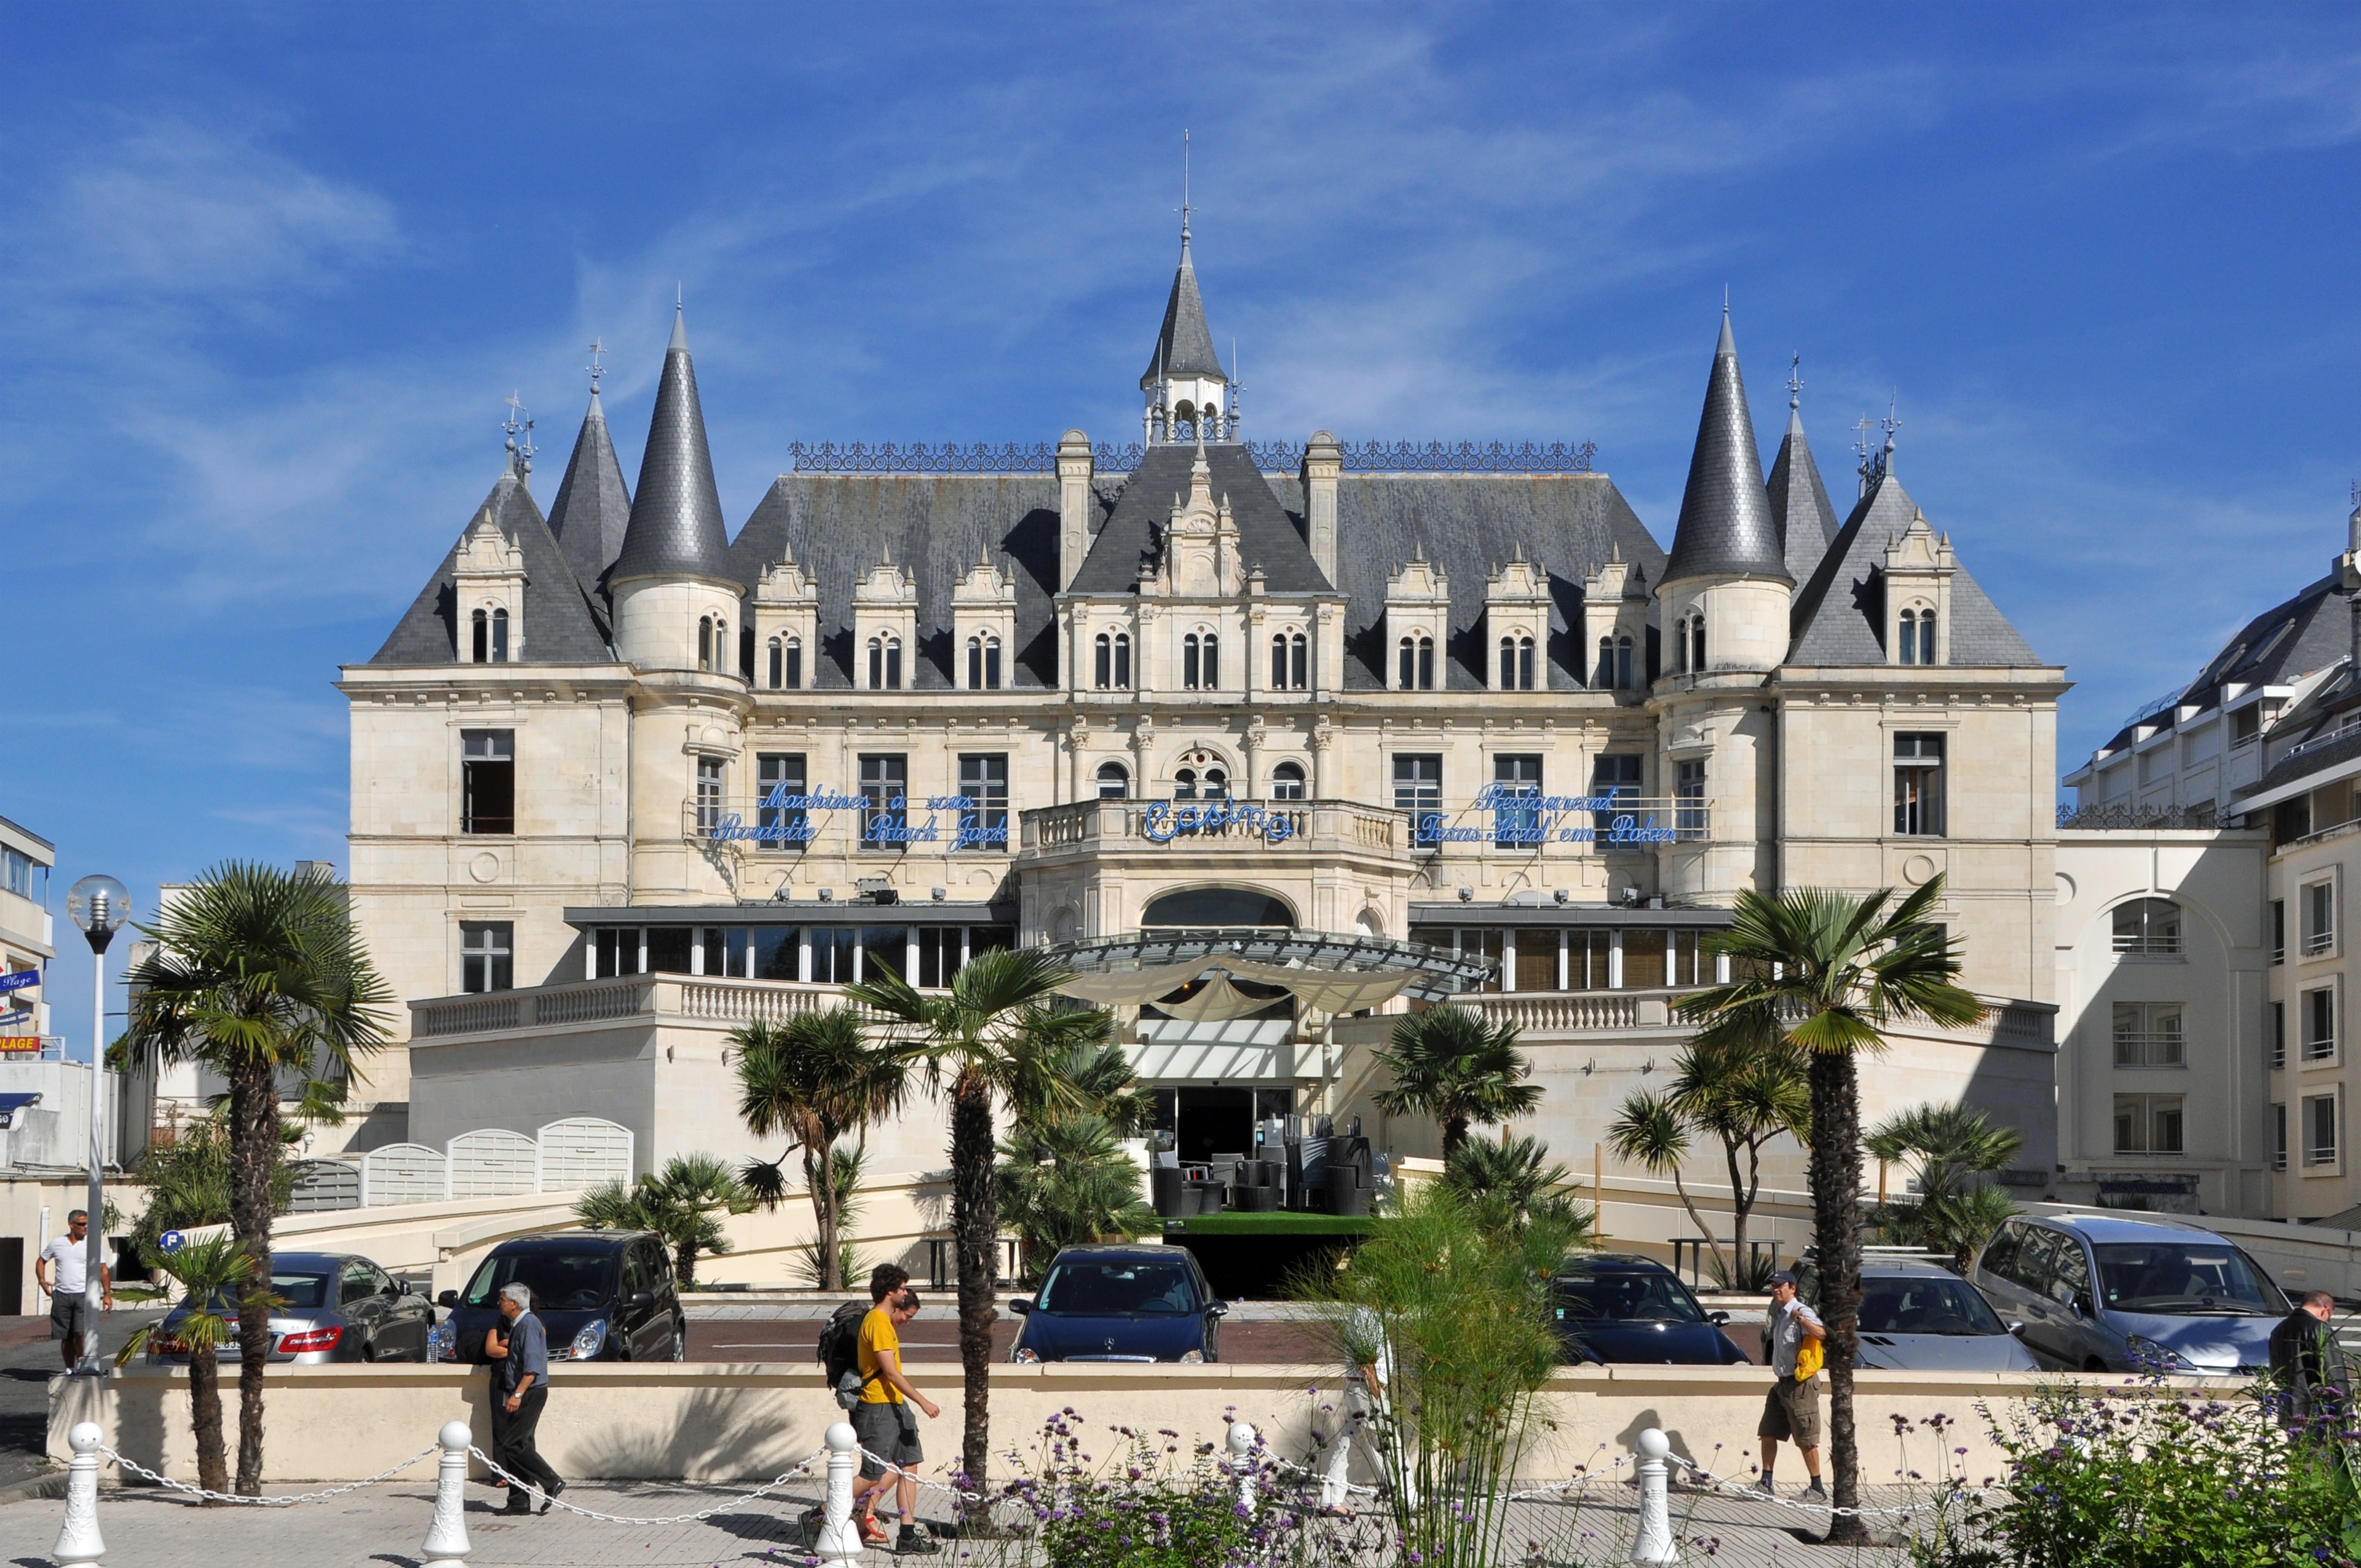 Casino d'Arcachon, Arcachon, Gironde (département), France